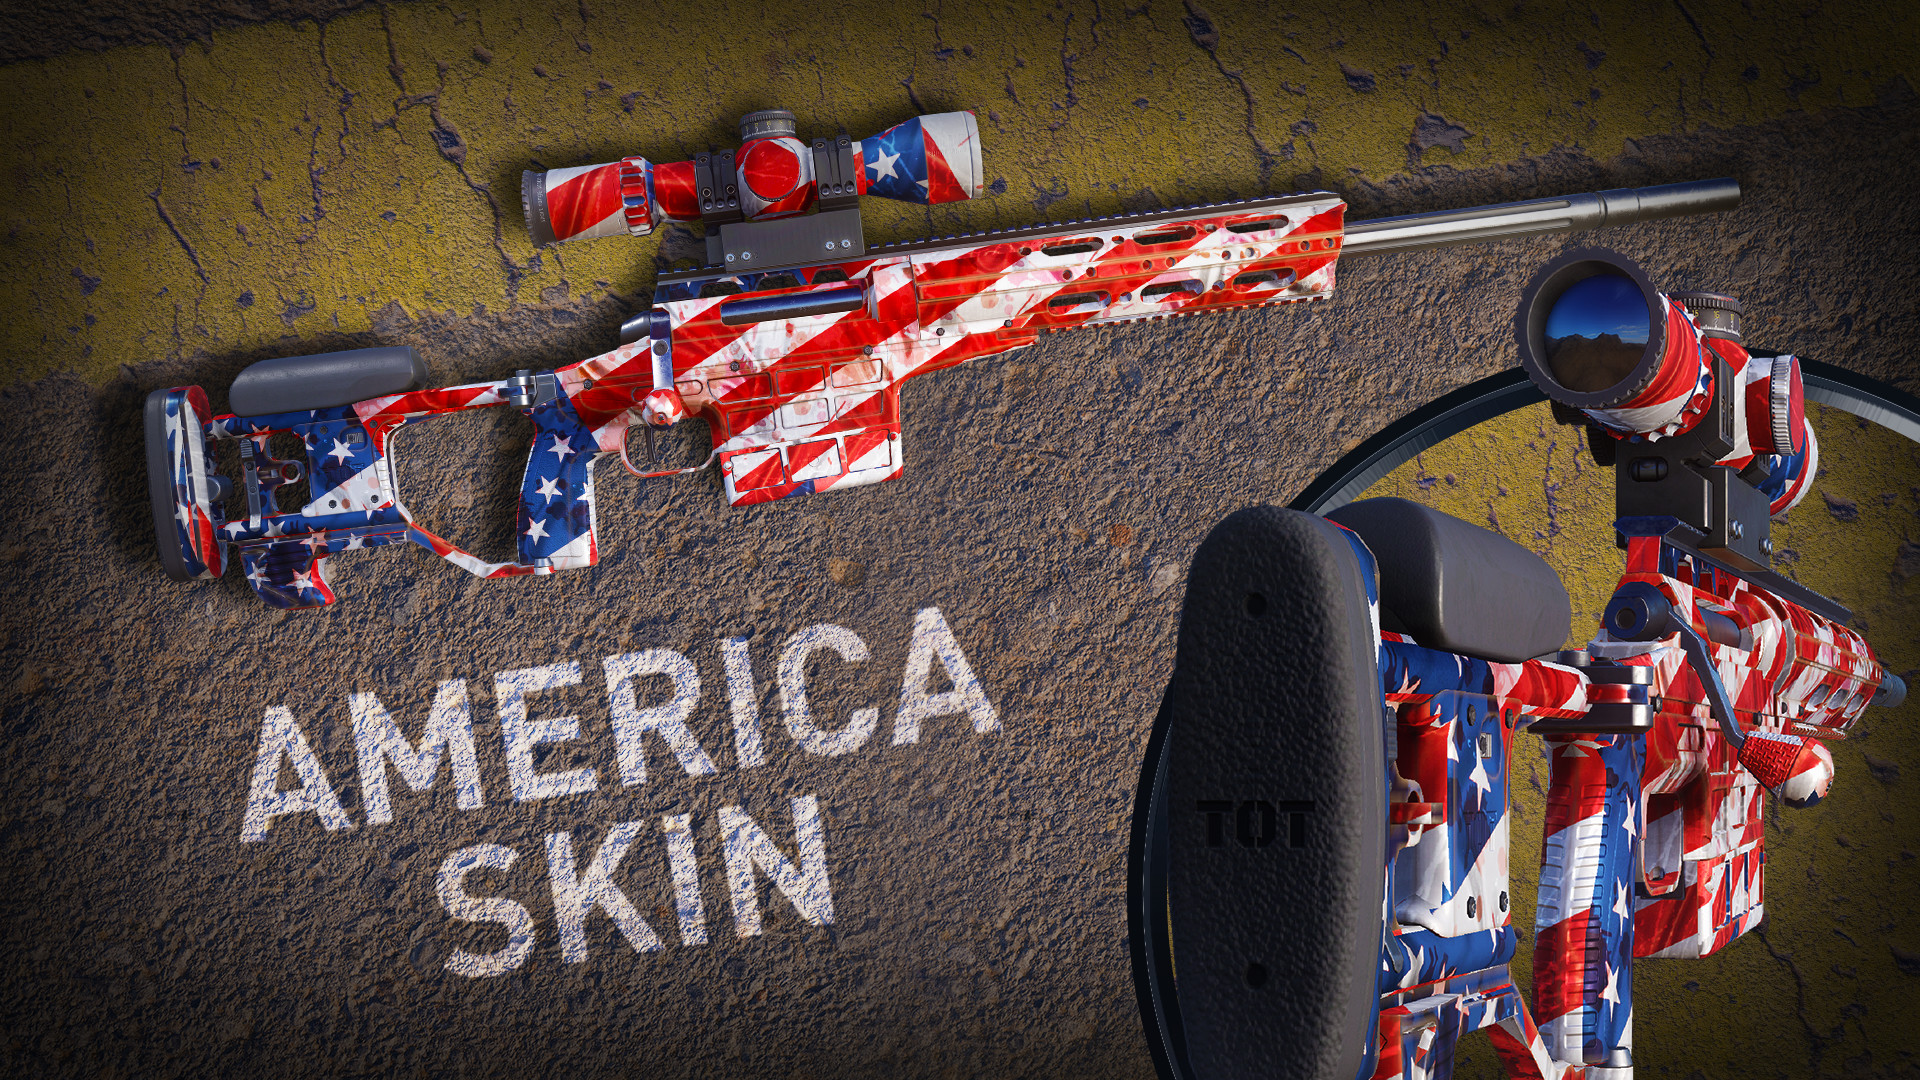 Sniper Ghost Warrior Contracts 2 - Skull & Bones Skin Pack on Steam